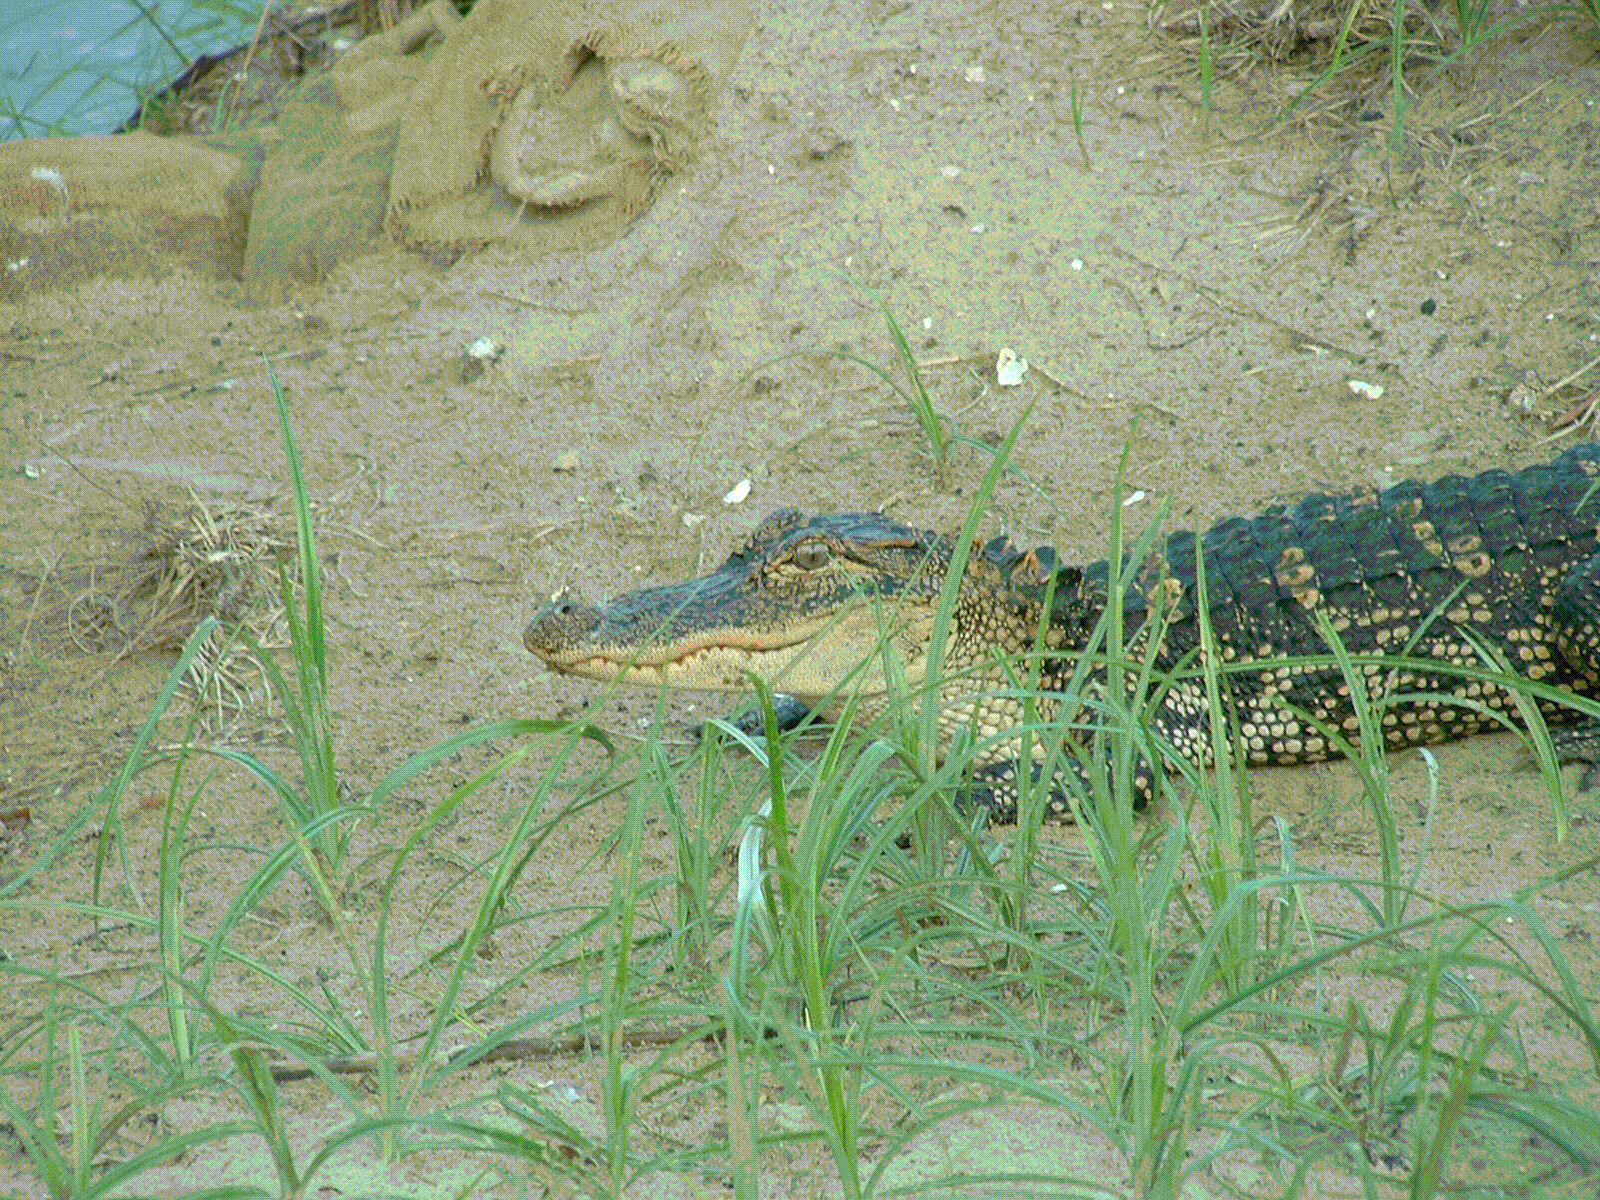 Young gator seen in Cuddo, 2004